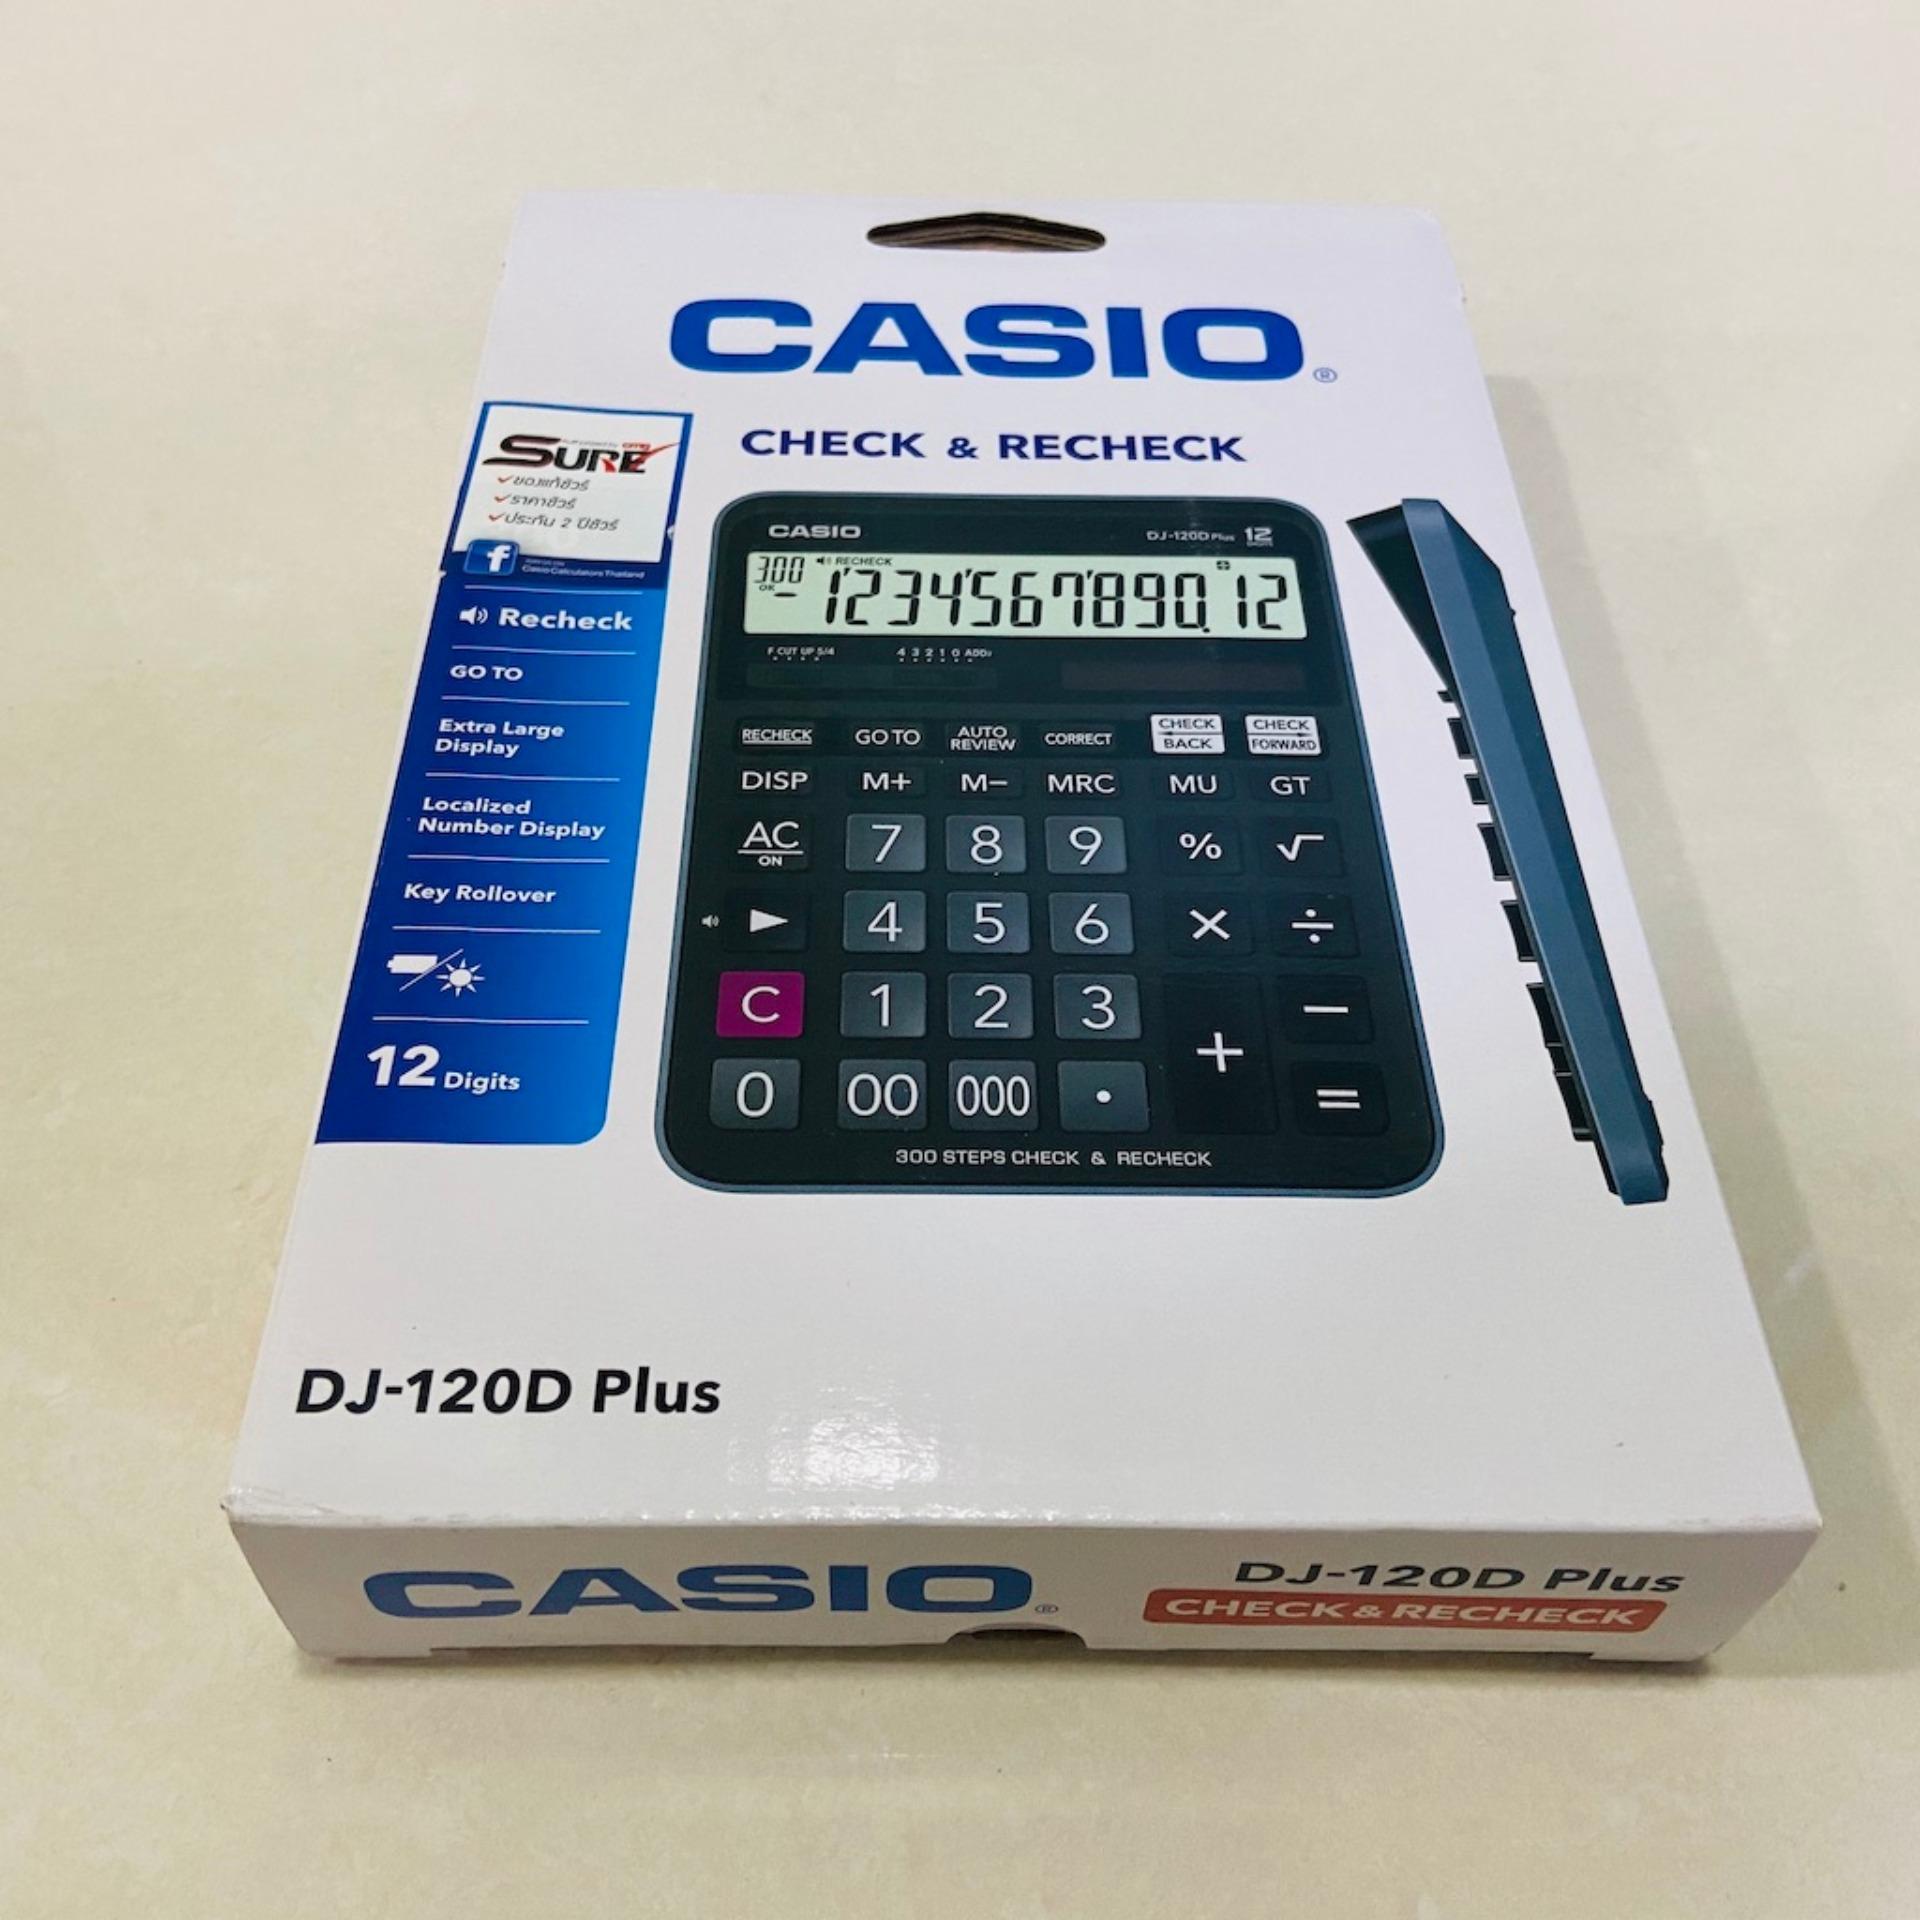 CASIO เครื่องคิดเลข รุ่น DJ-120D PLUS ของแท้ 100% ประกันศูนย์ เซ็นทรัลCMG 2 ปี จากร้าน MIN WATCH